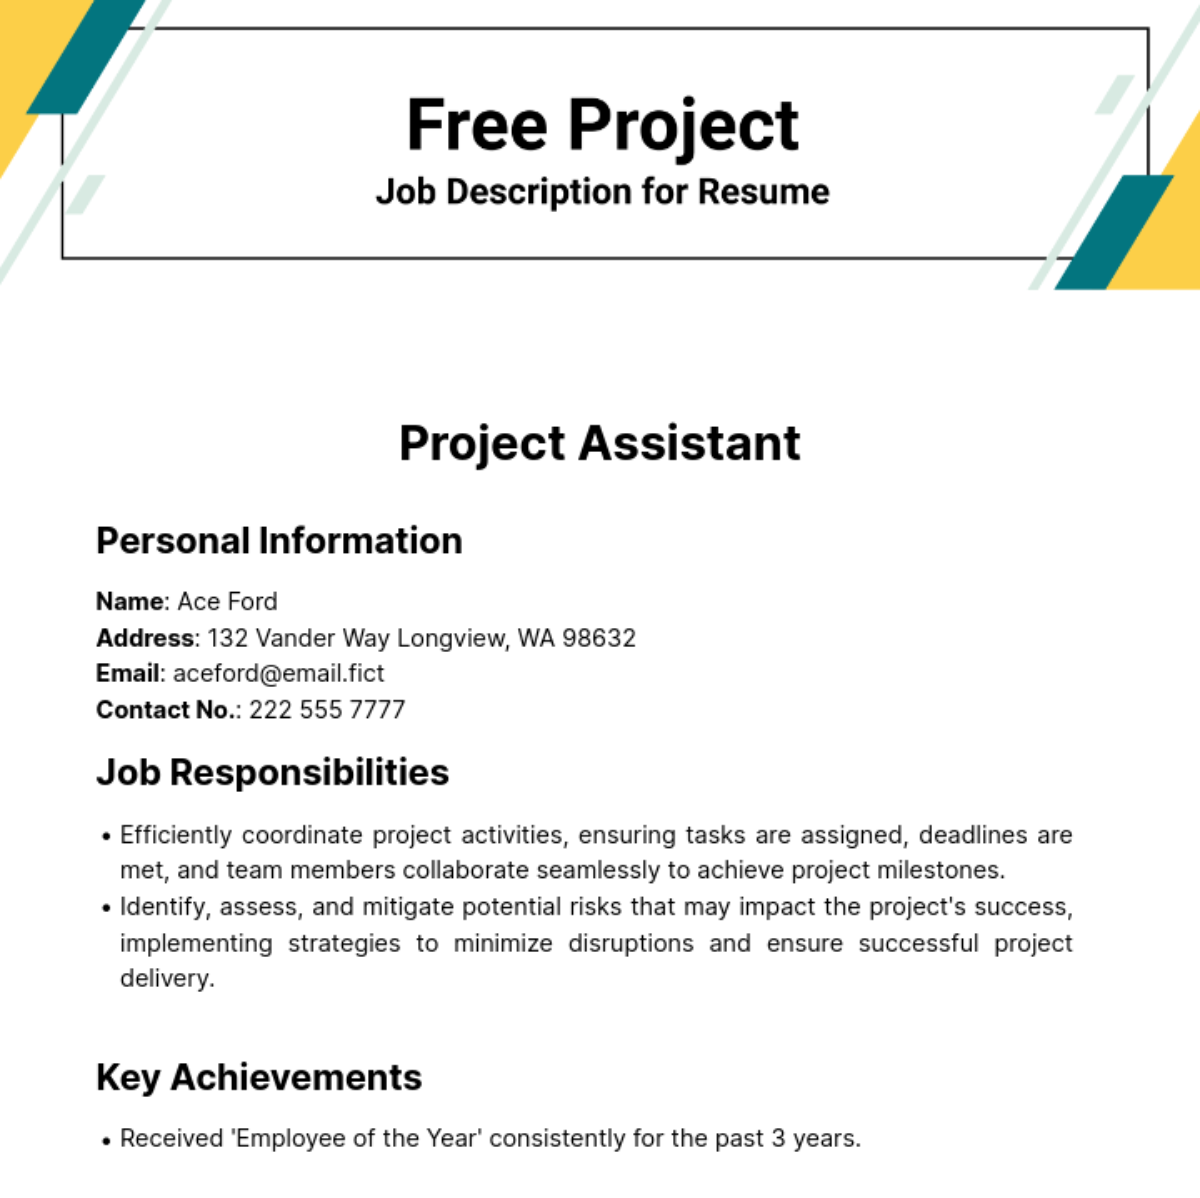 Project Job Description for Resume Template